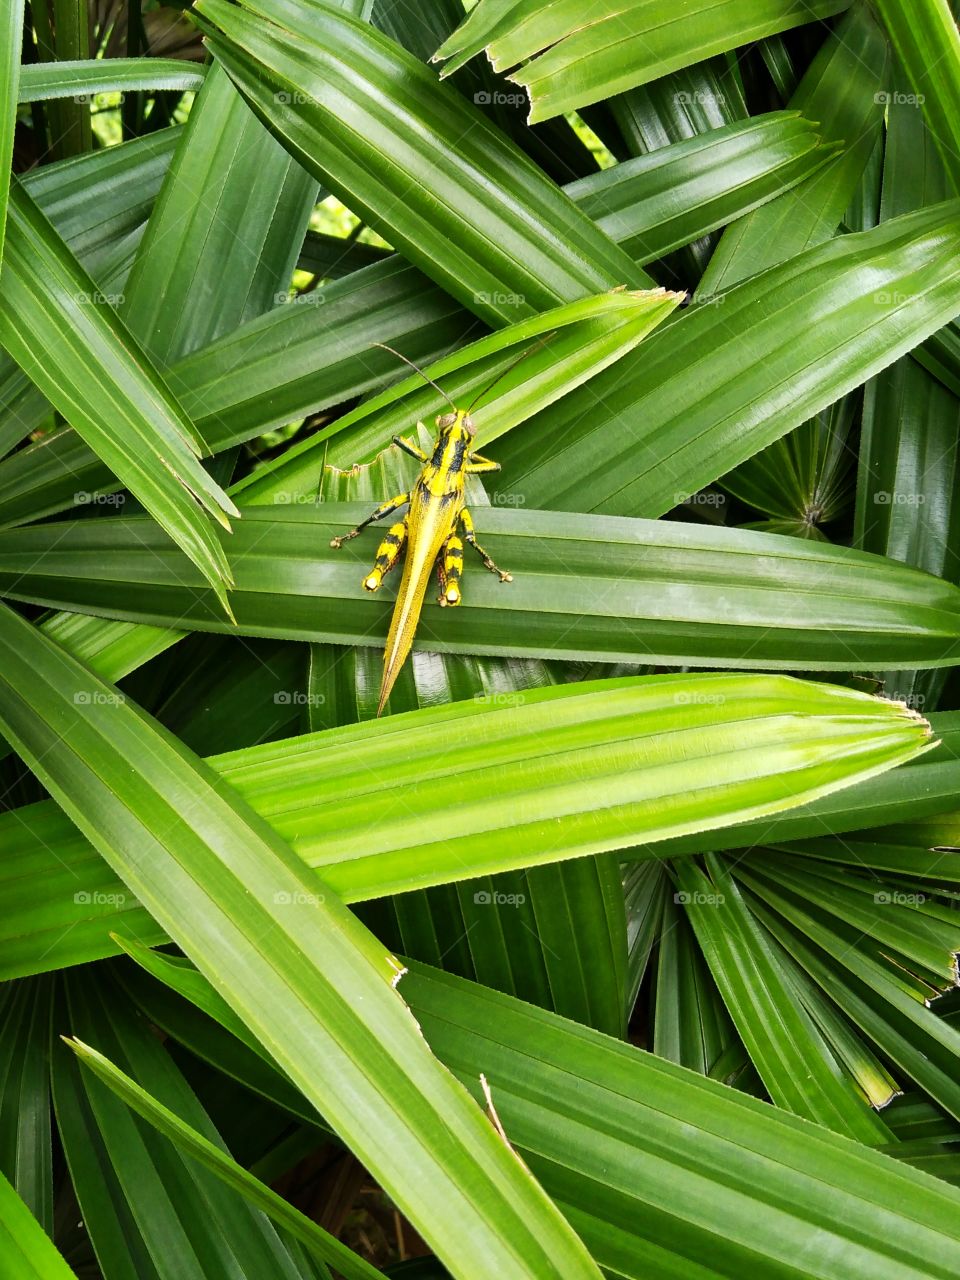 Grasshopper on the leaf.